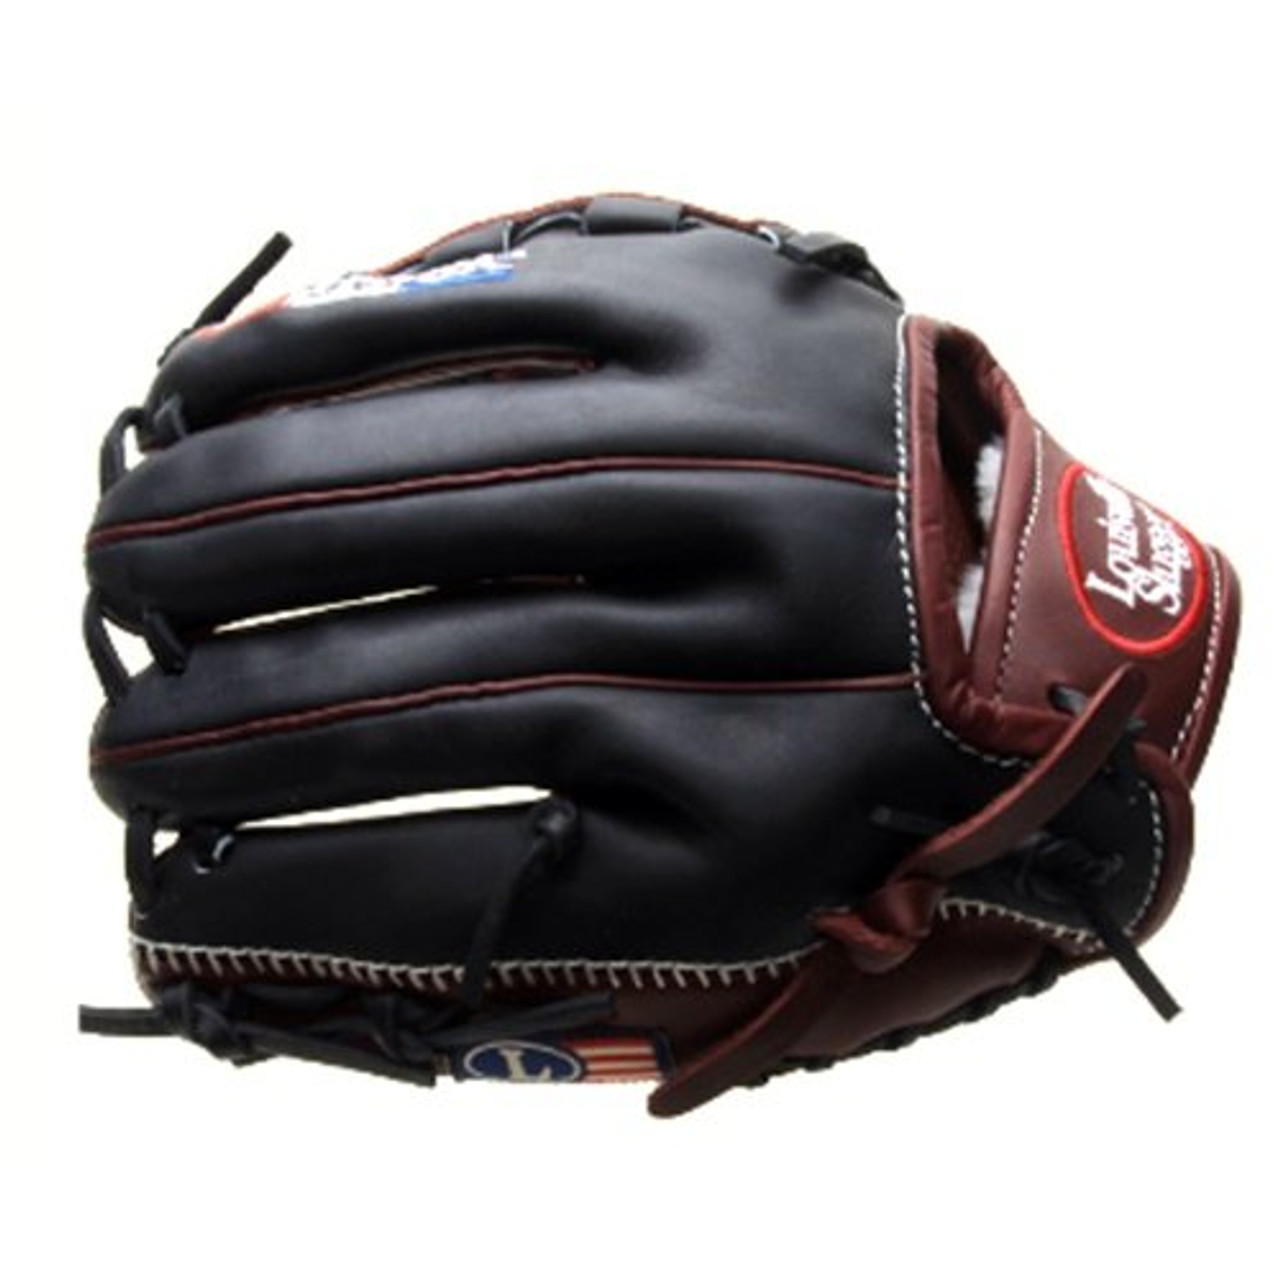 Details about   Louisville Slugger Evolution EV1200 Baseball Glove 12.00" Right-Hand-Throw NEW 